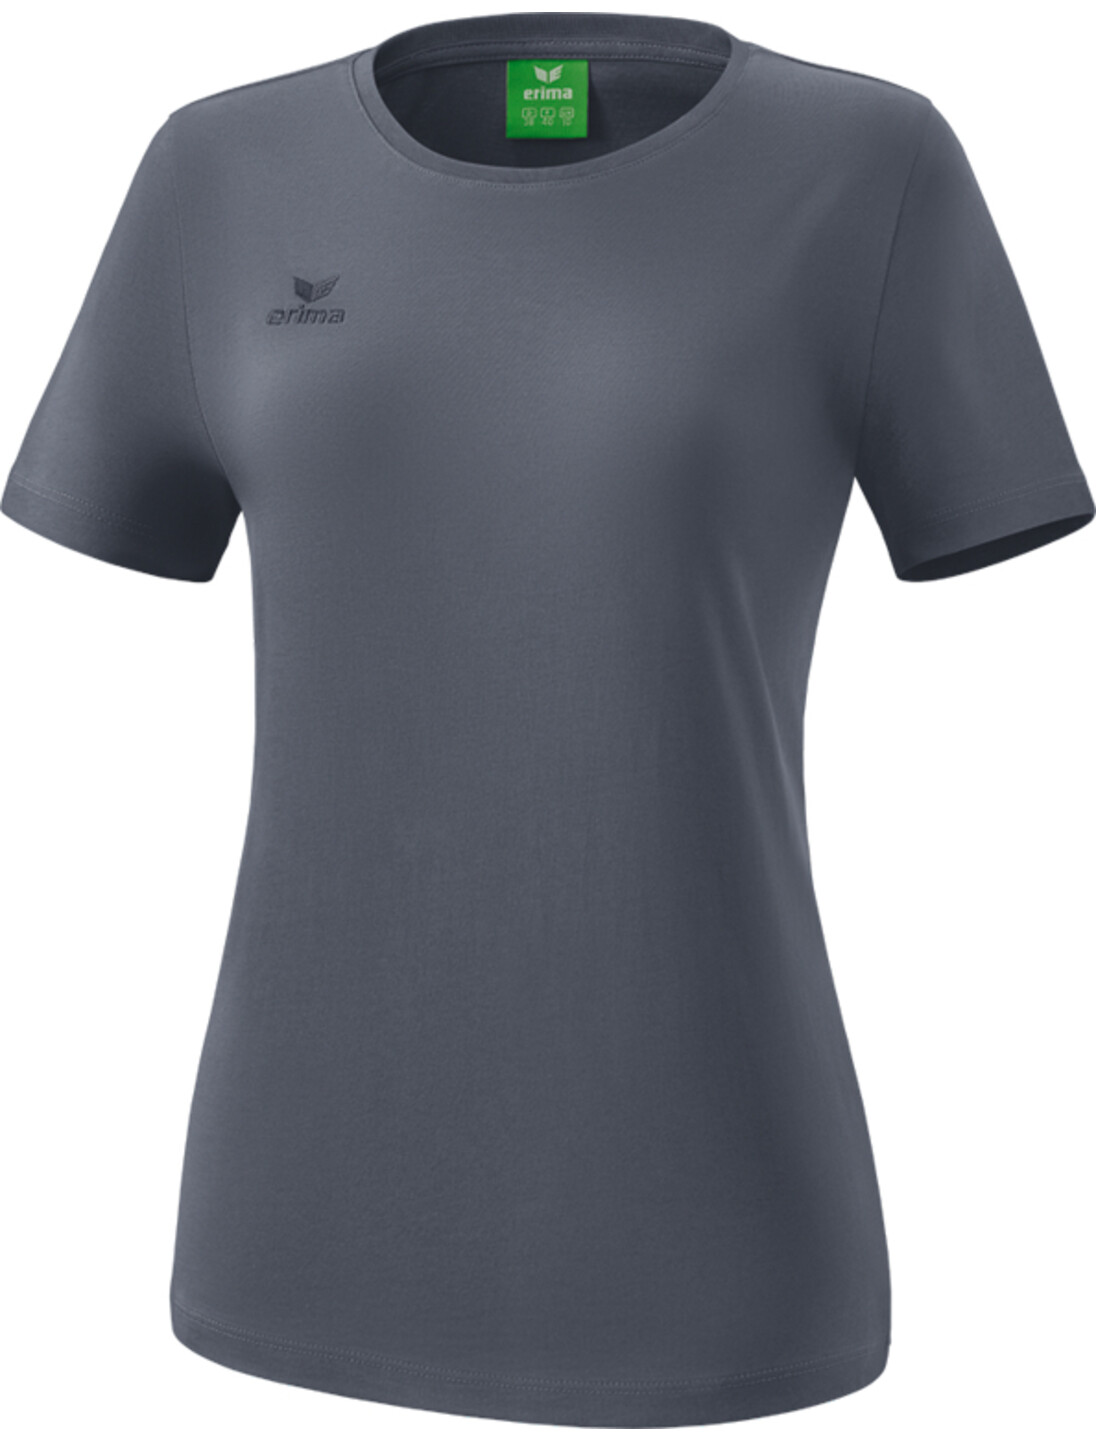 Erima T-Shirt Funktions Teamsport Damen Trainingsshirt Freizeitshirt NEU 